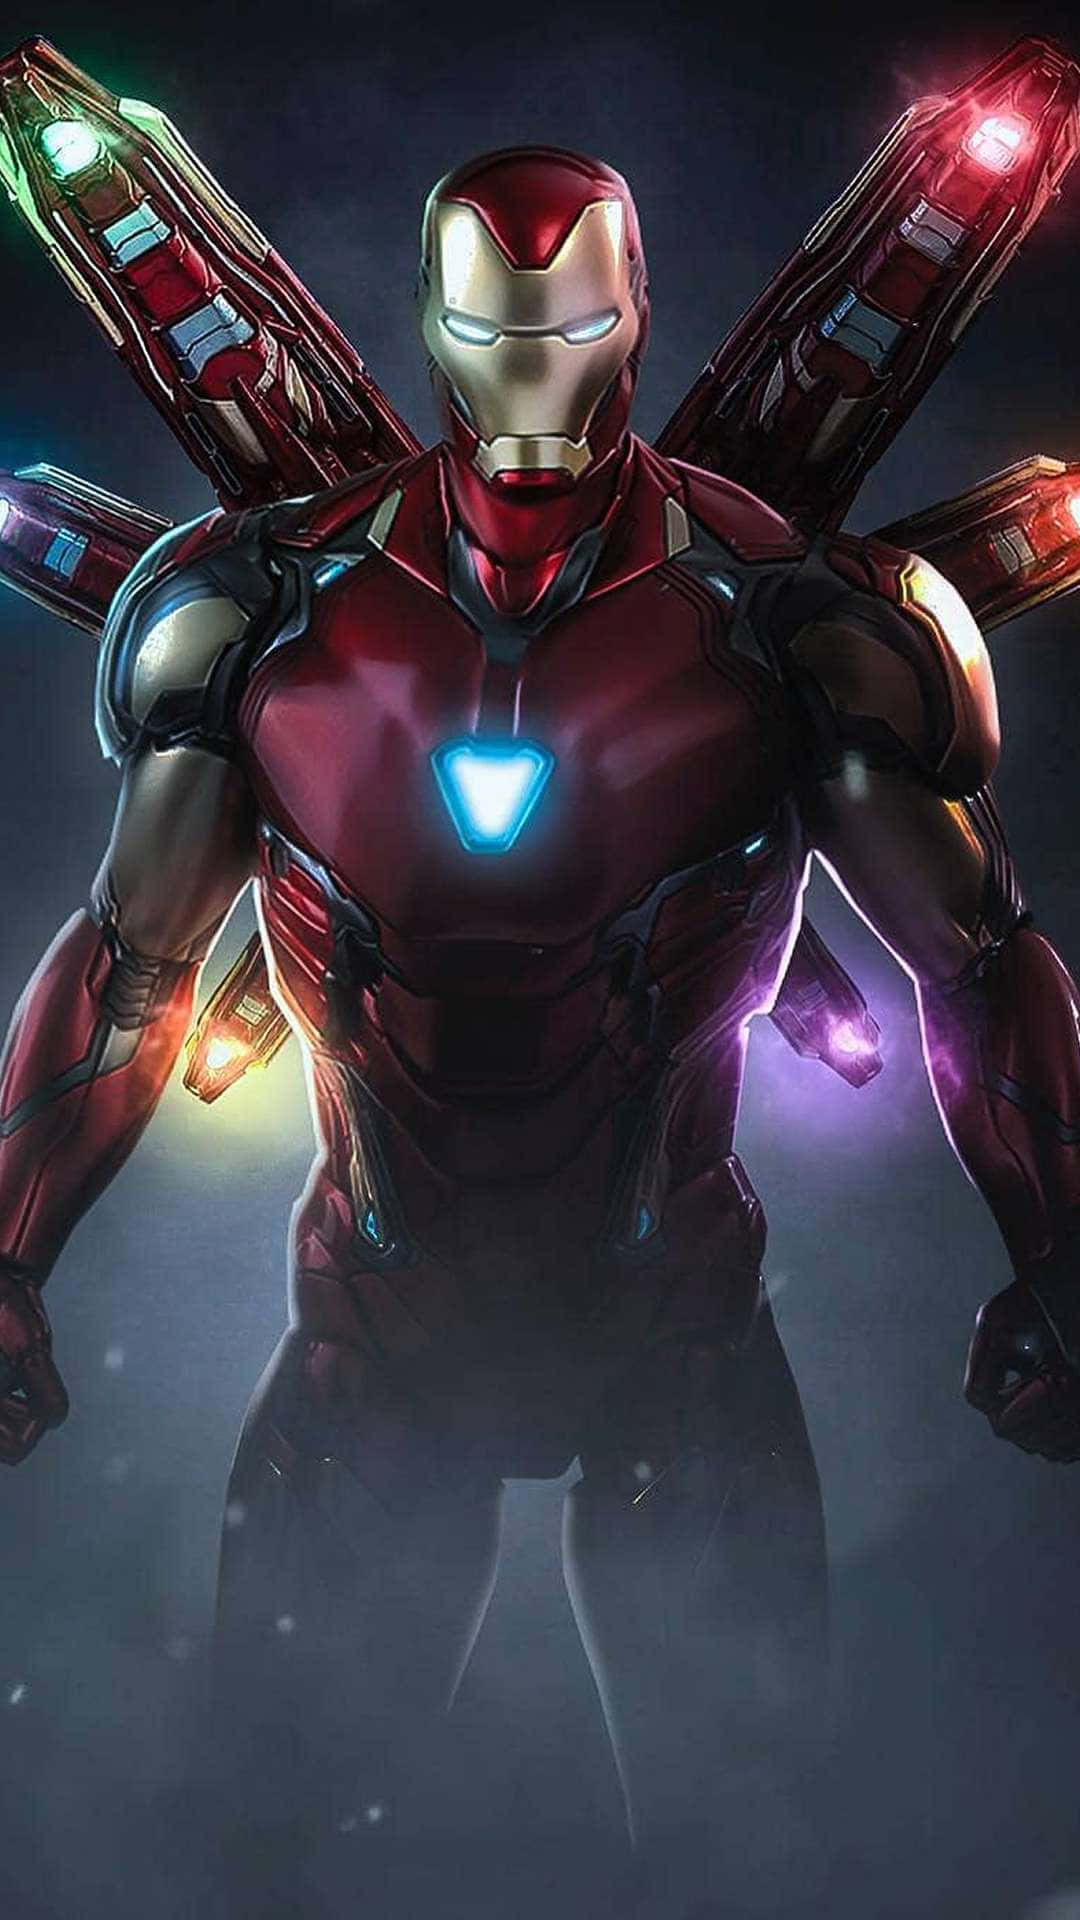 Muestratu Amor Por Iron Man Con Este Increíble Fondo De Pantalla Para Iphone. Fondo de pantalla